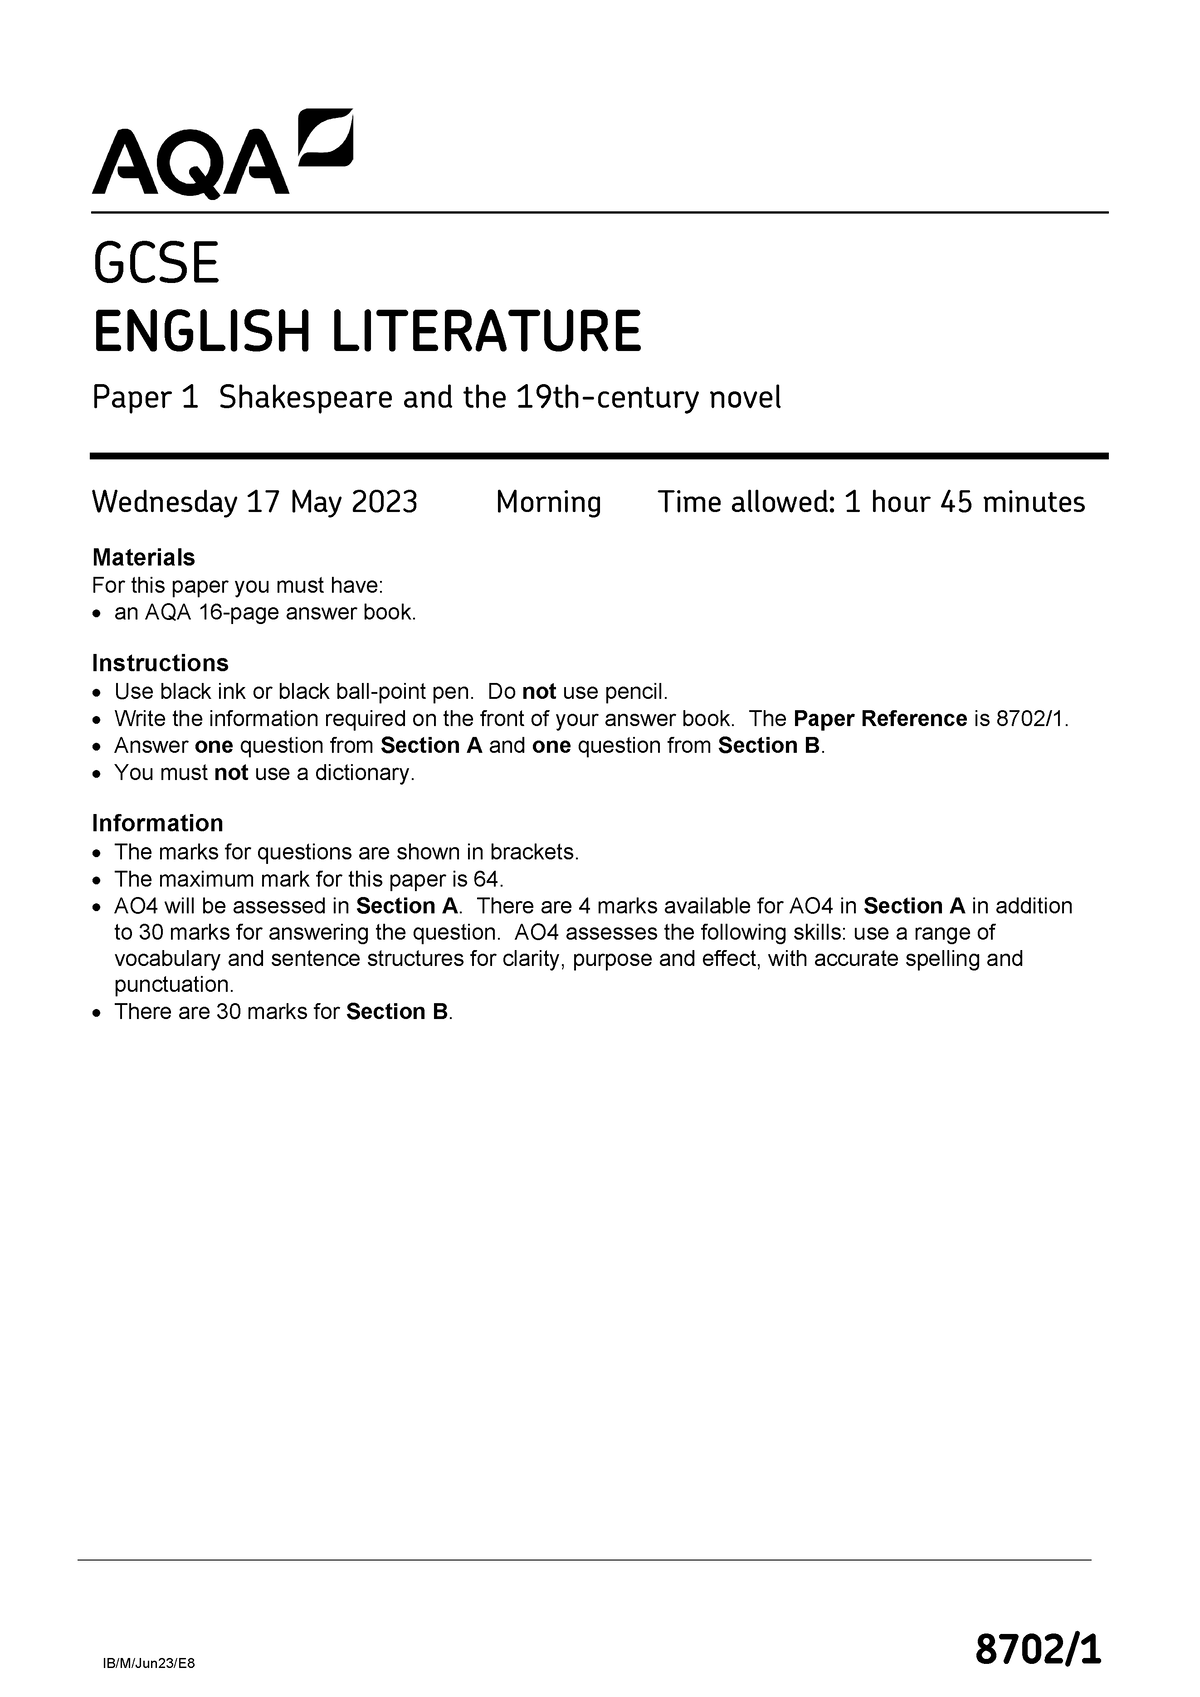 English Literature 2023 Paper 1 IB/M/Jun23/E 8 8702/ Wednesday 17 May